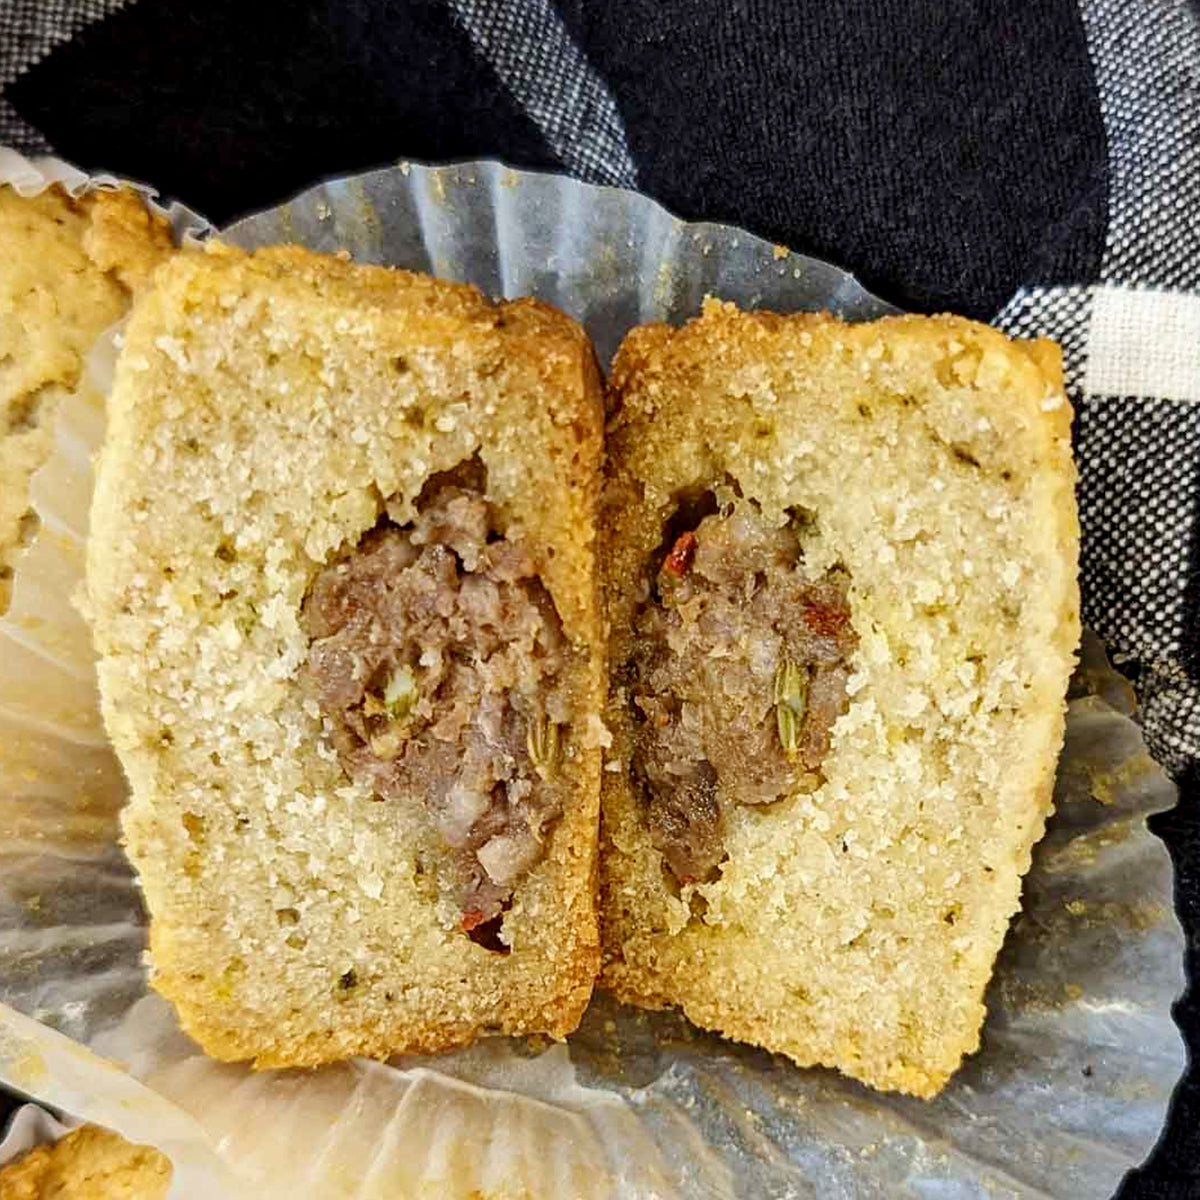 sausage stuffed muffin split in half